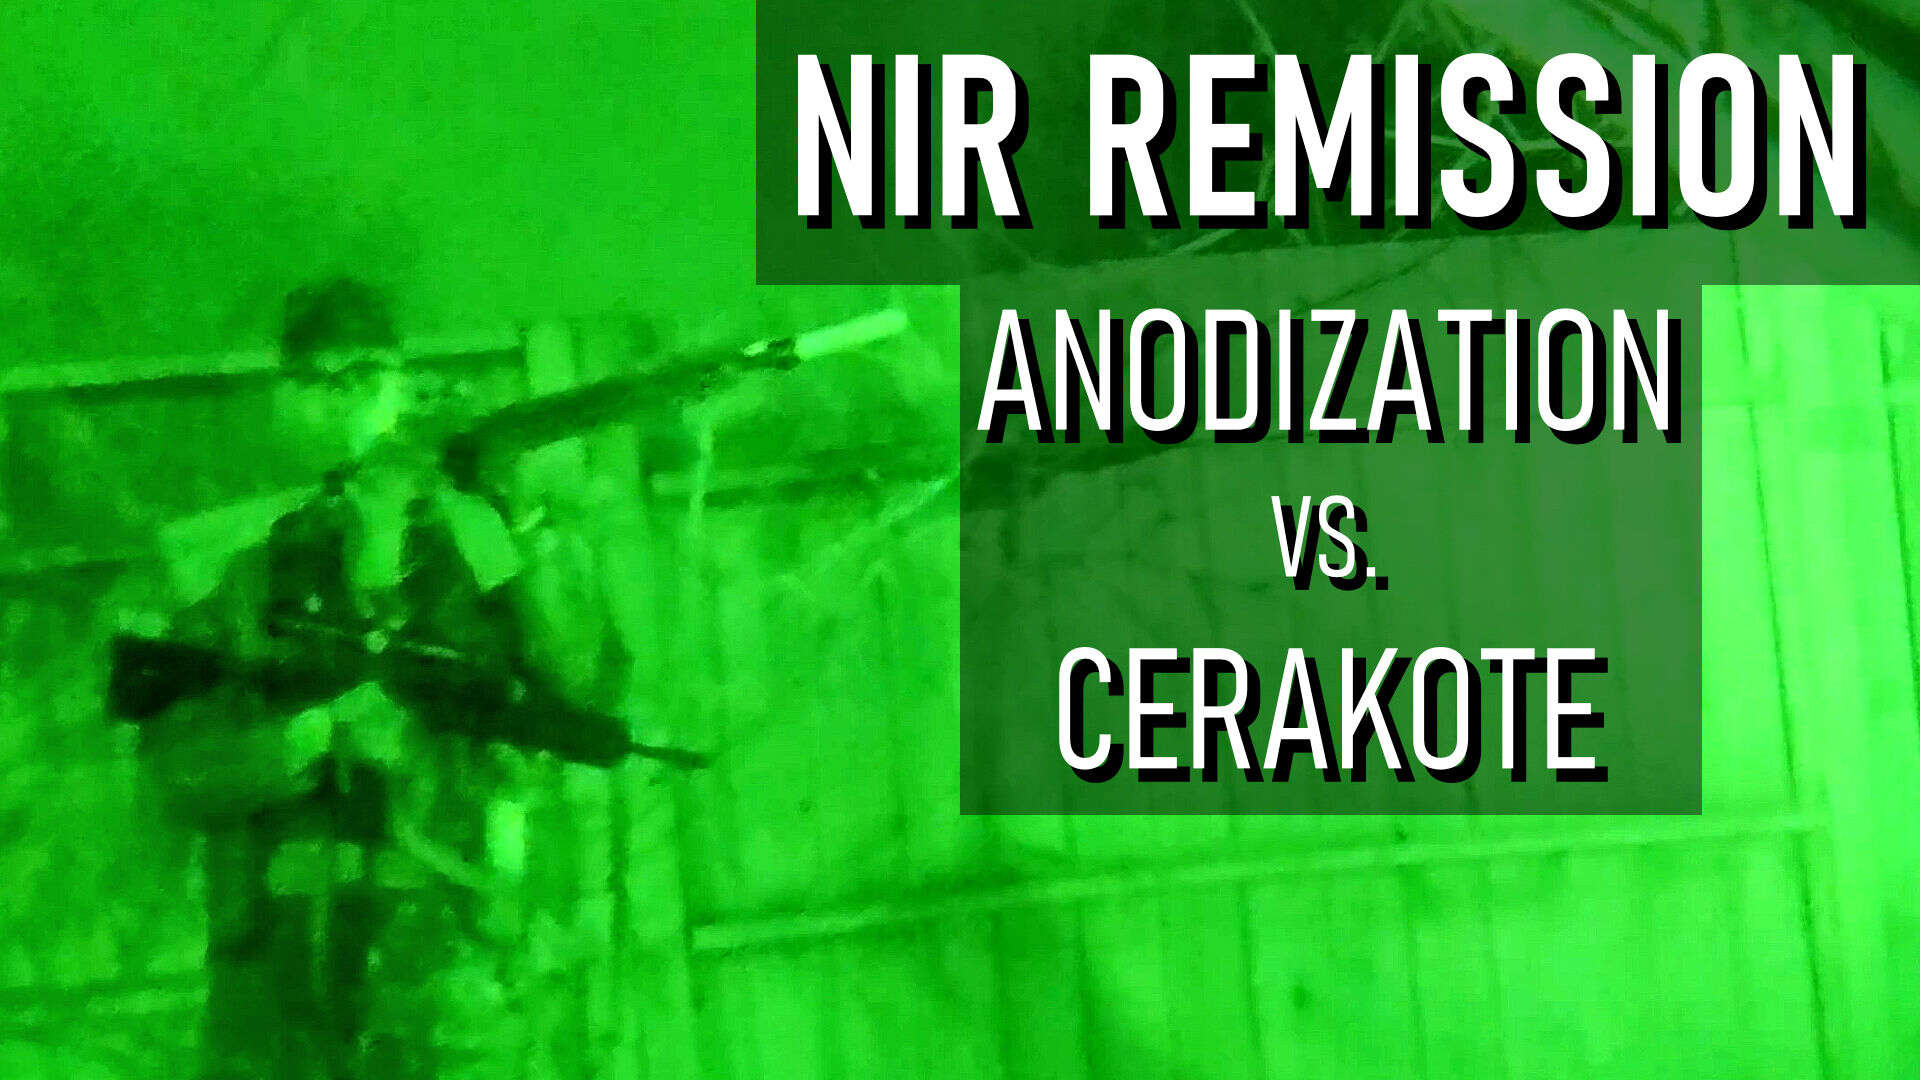 NIR Remission on Rifles - Comparison of Tanodization, Cerakote